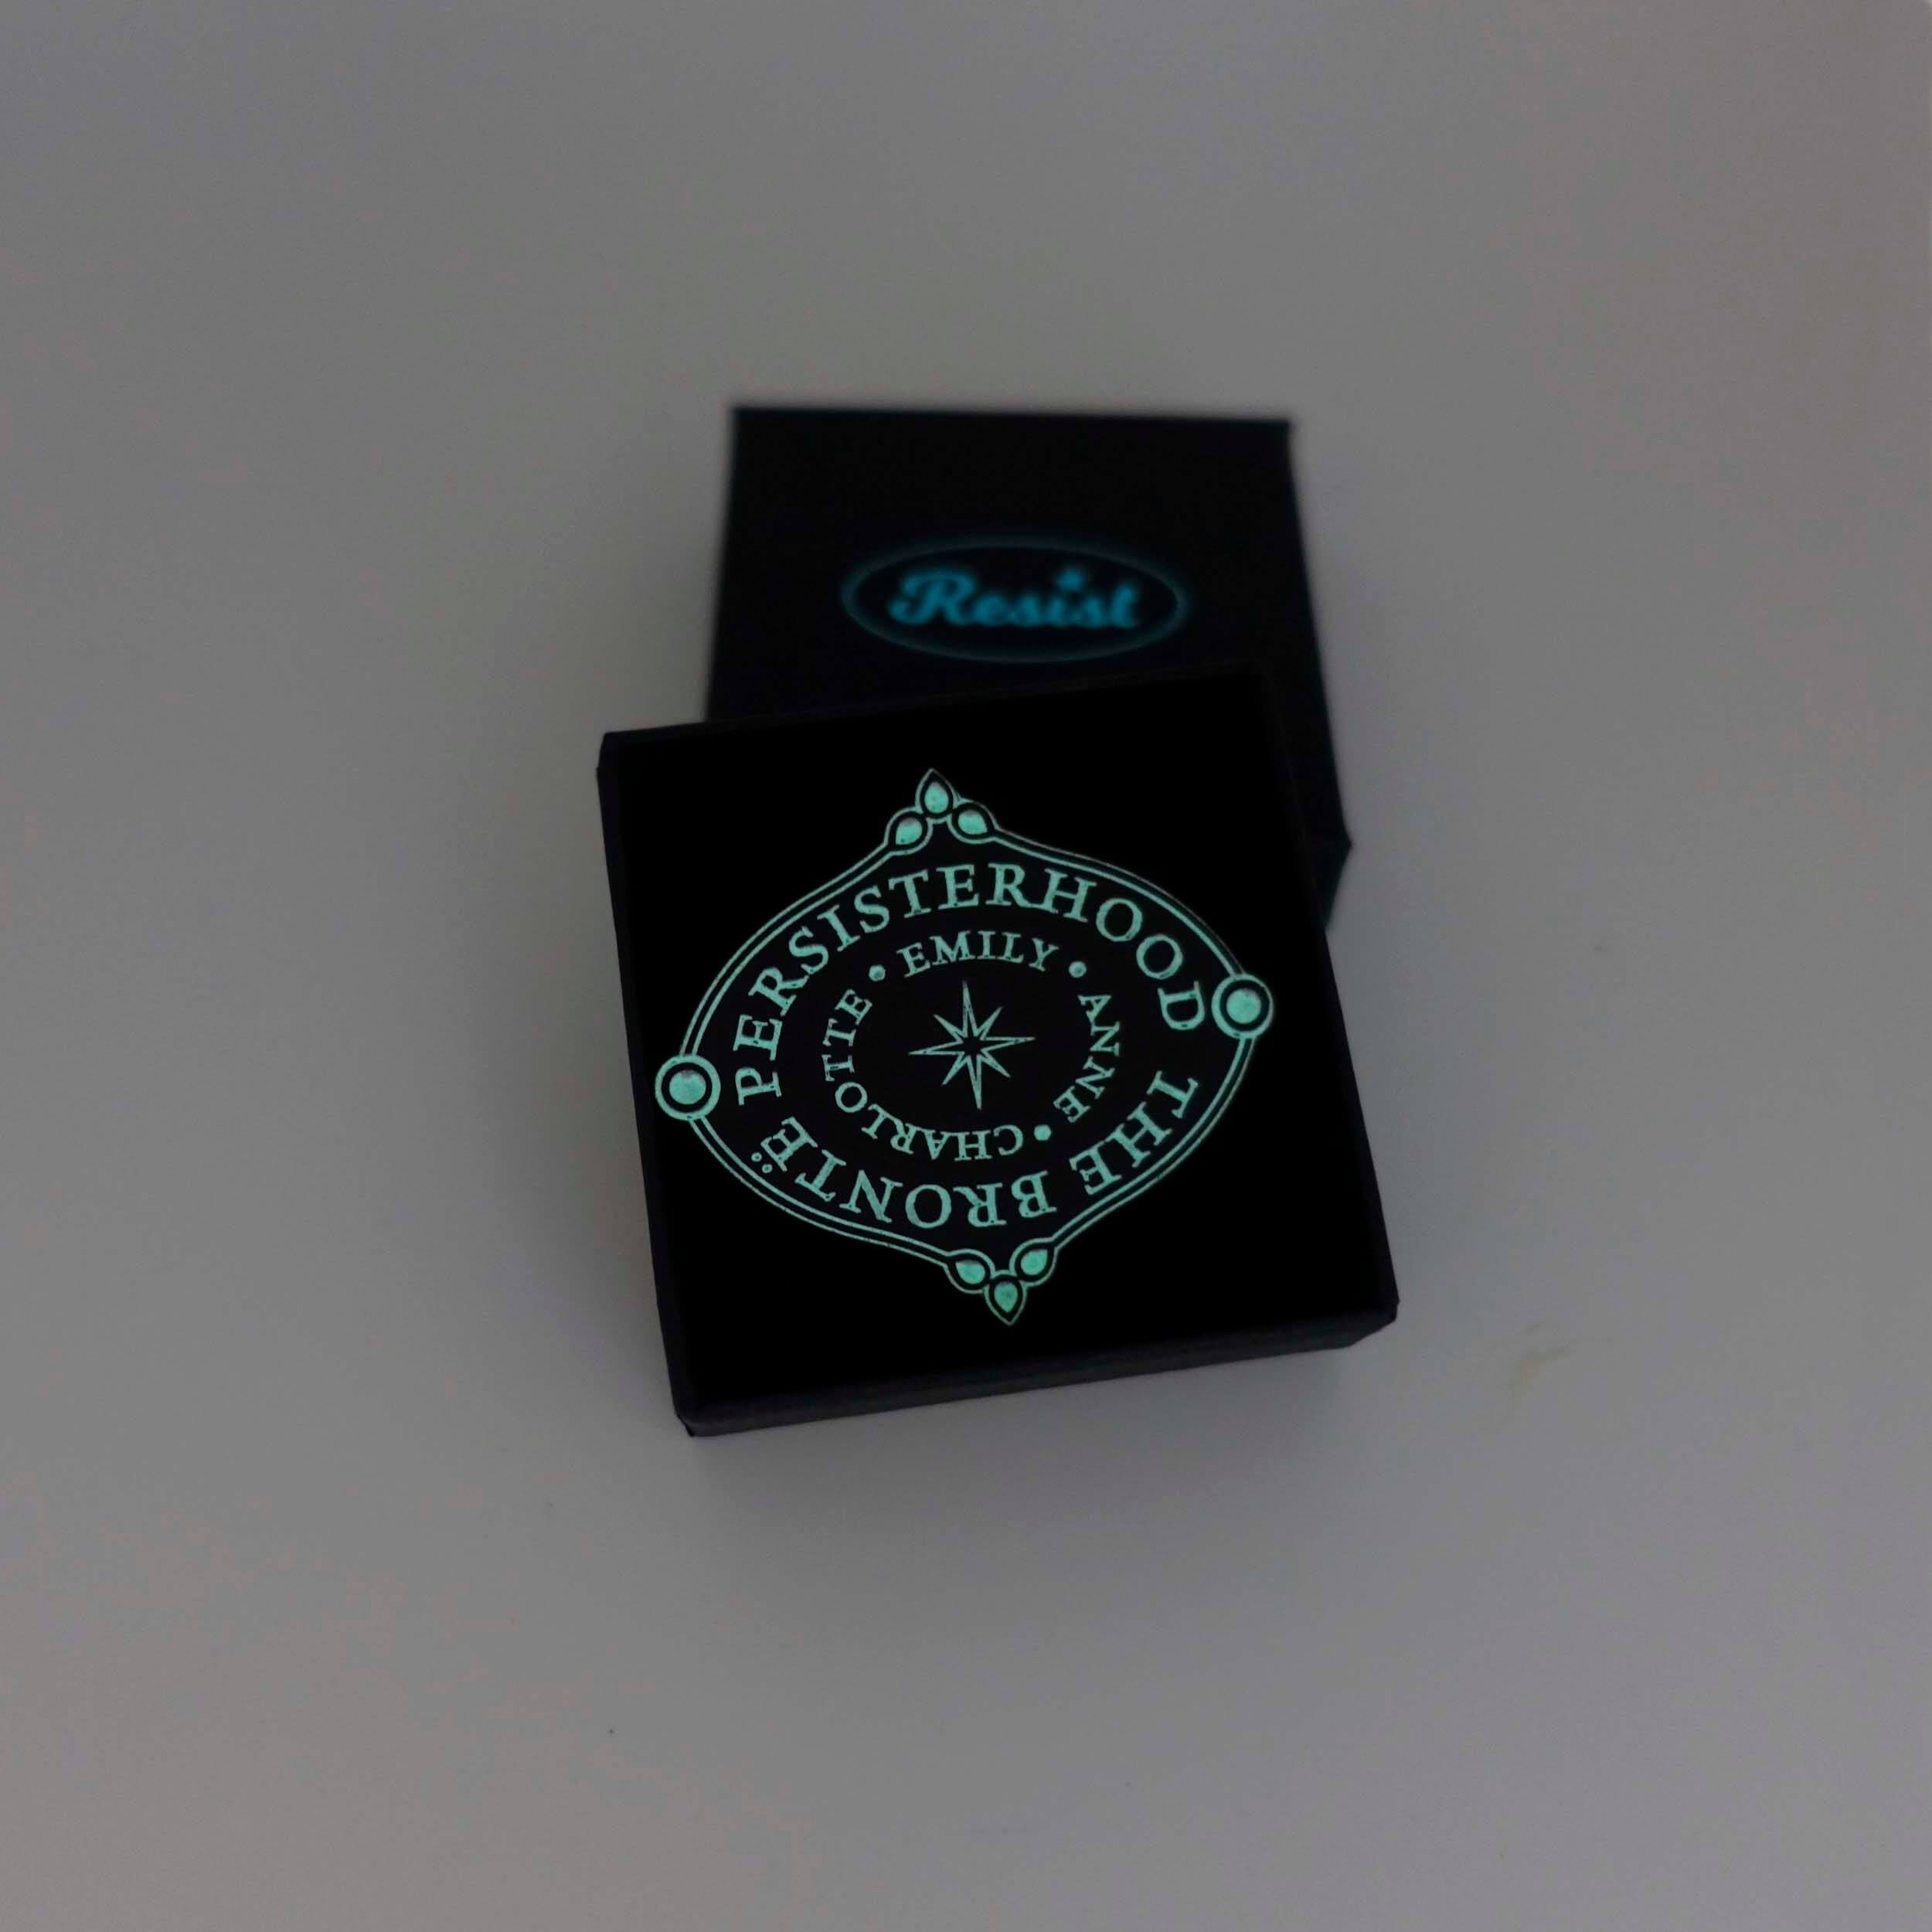 The Brontë Persisterhood brooch shown glowing in the dark in a Wear and Resist gift box.